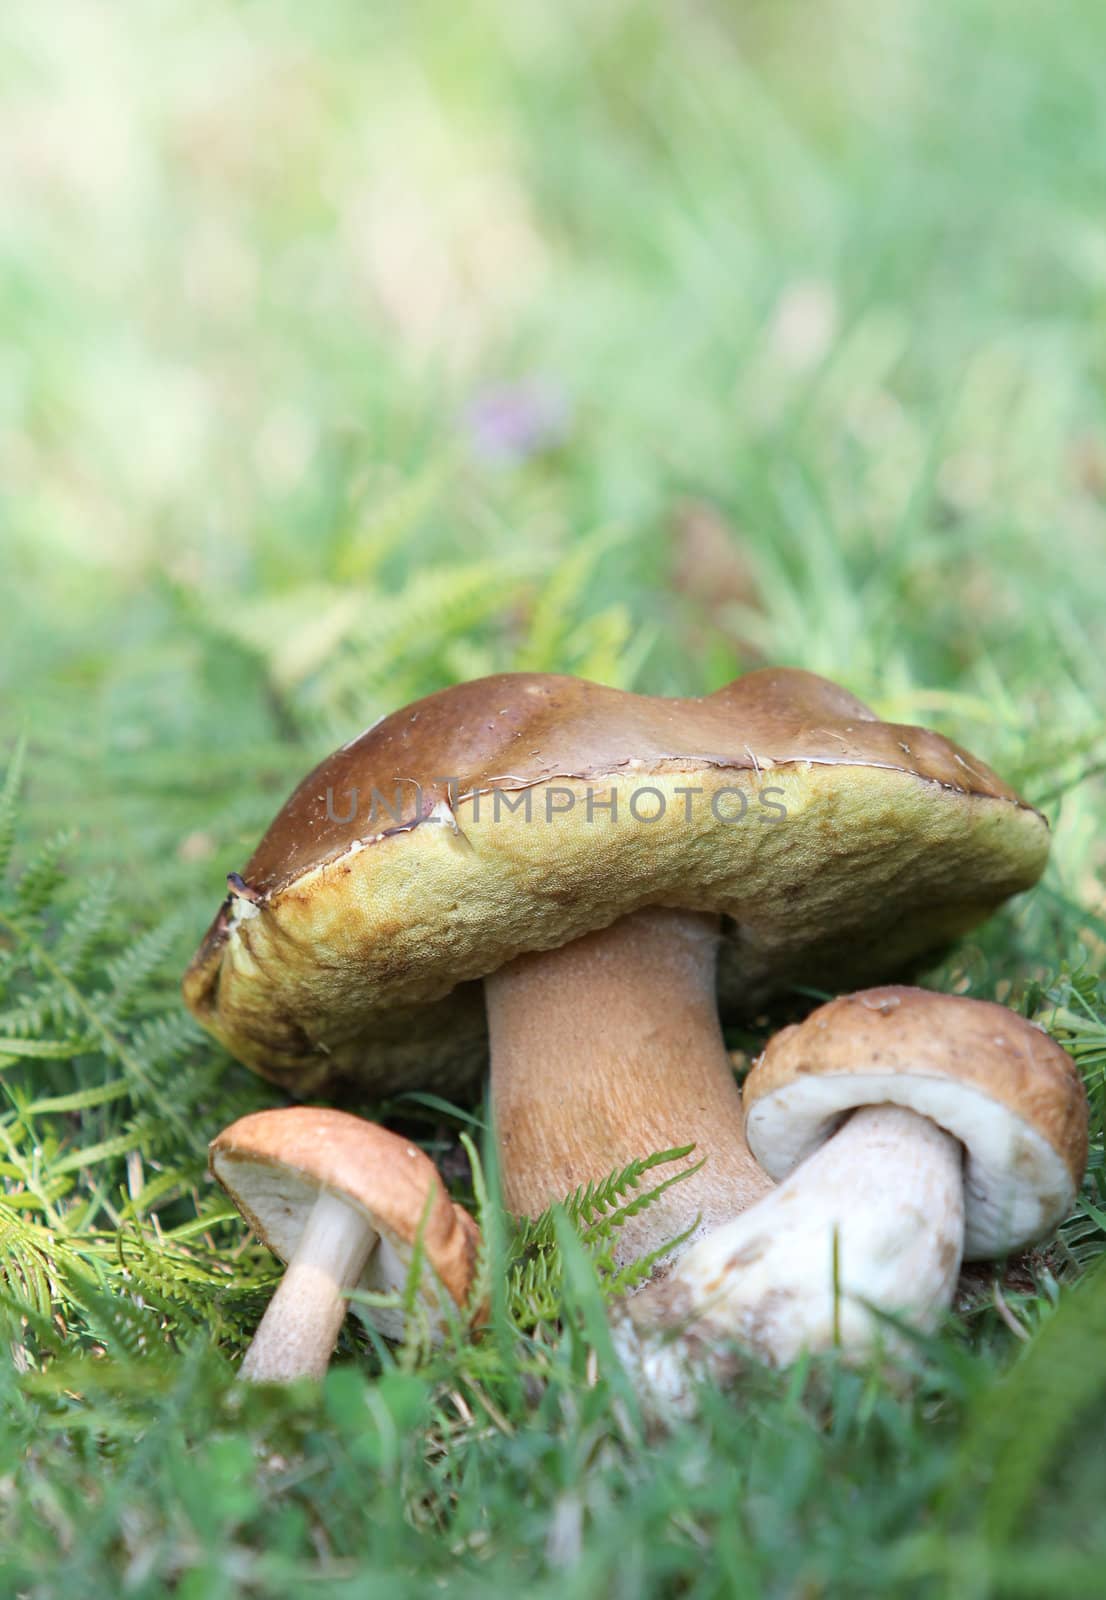 Healthy autumn mushrooms by captblack76